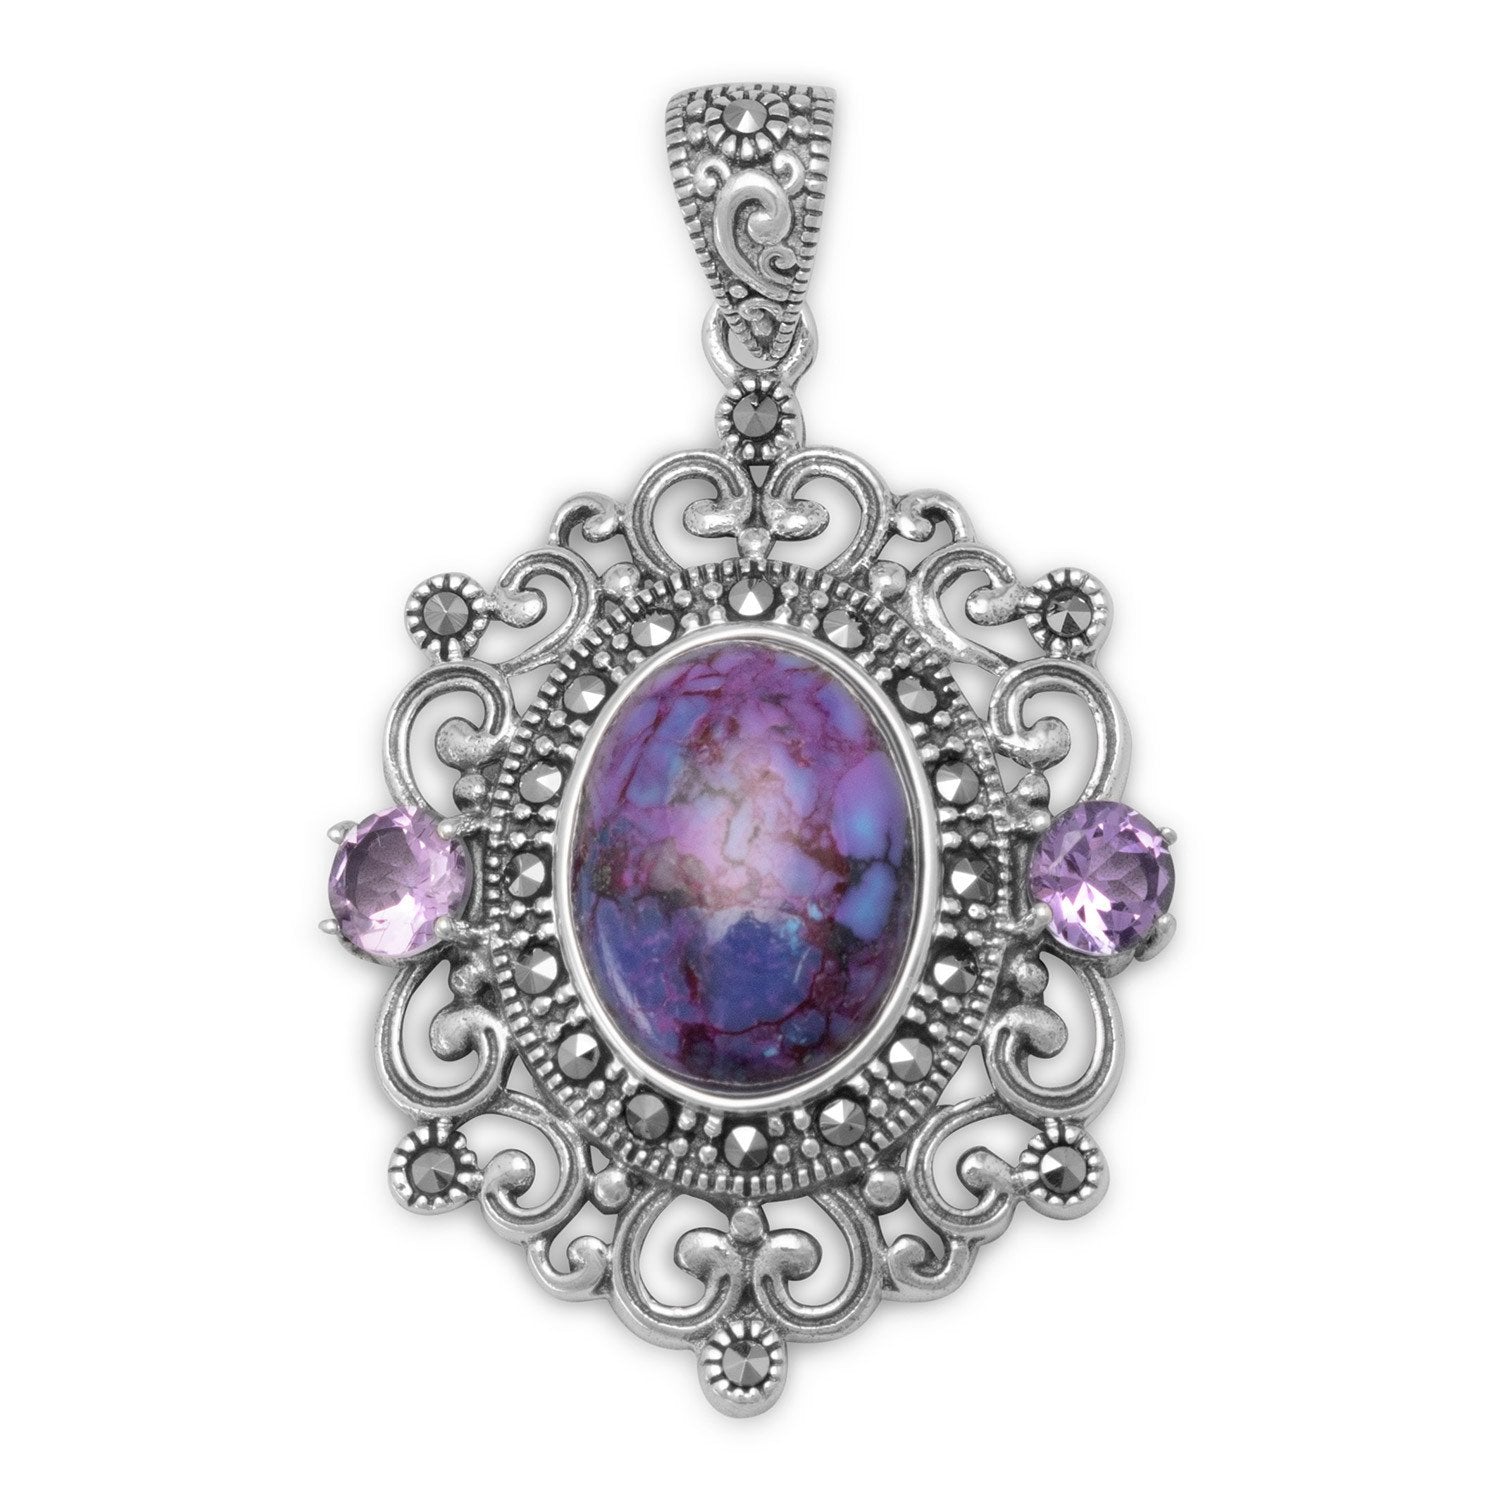 Ornate Marcasite and Reconstituted Purple Turquoise Pendant - Joyeria Lady